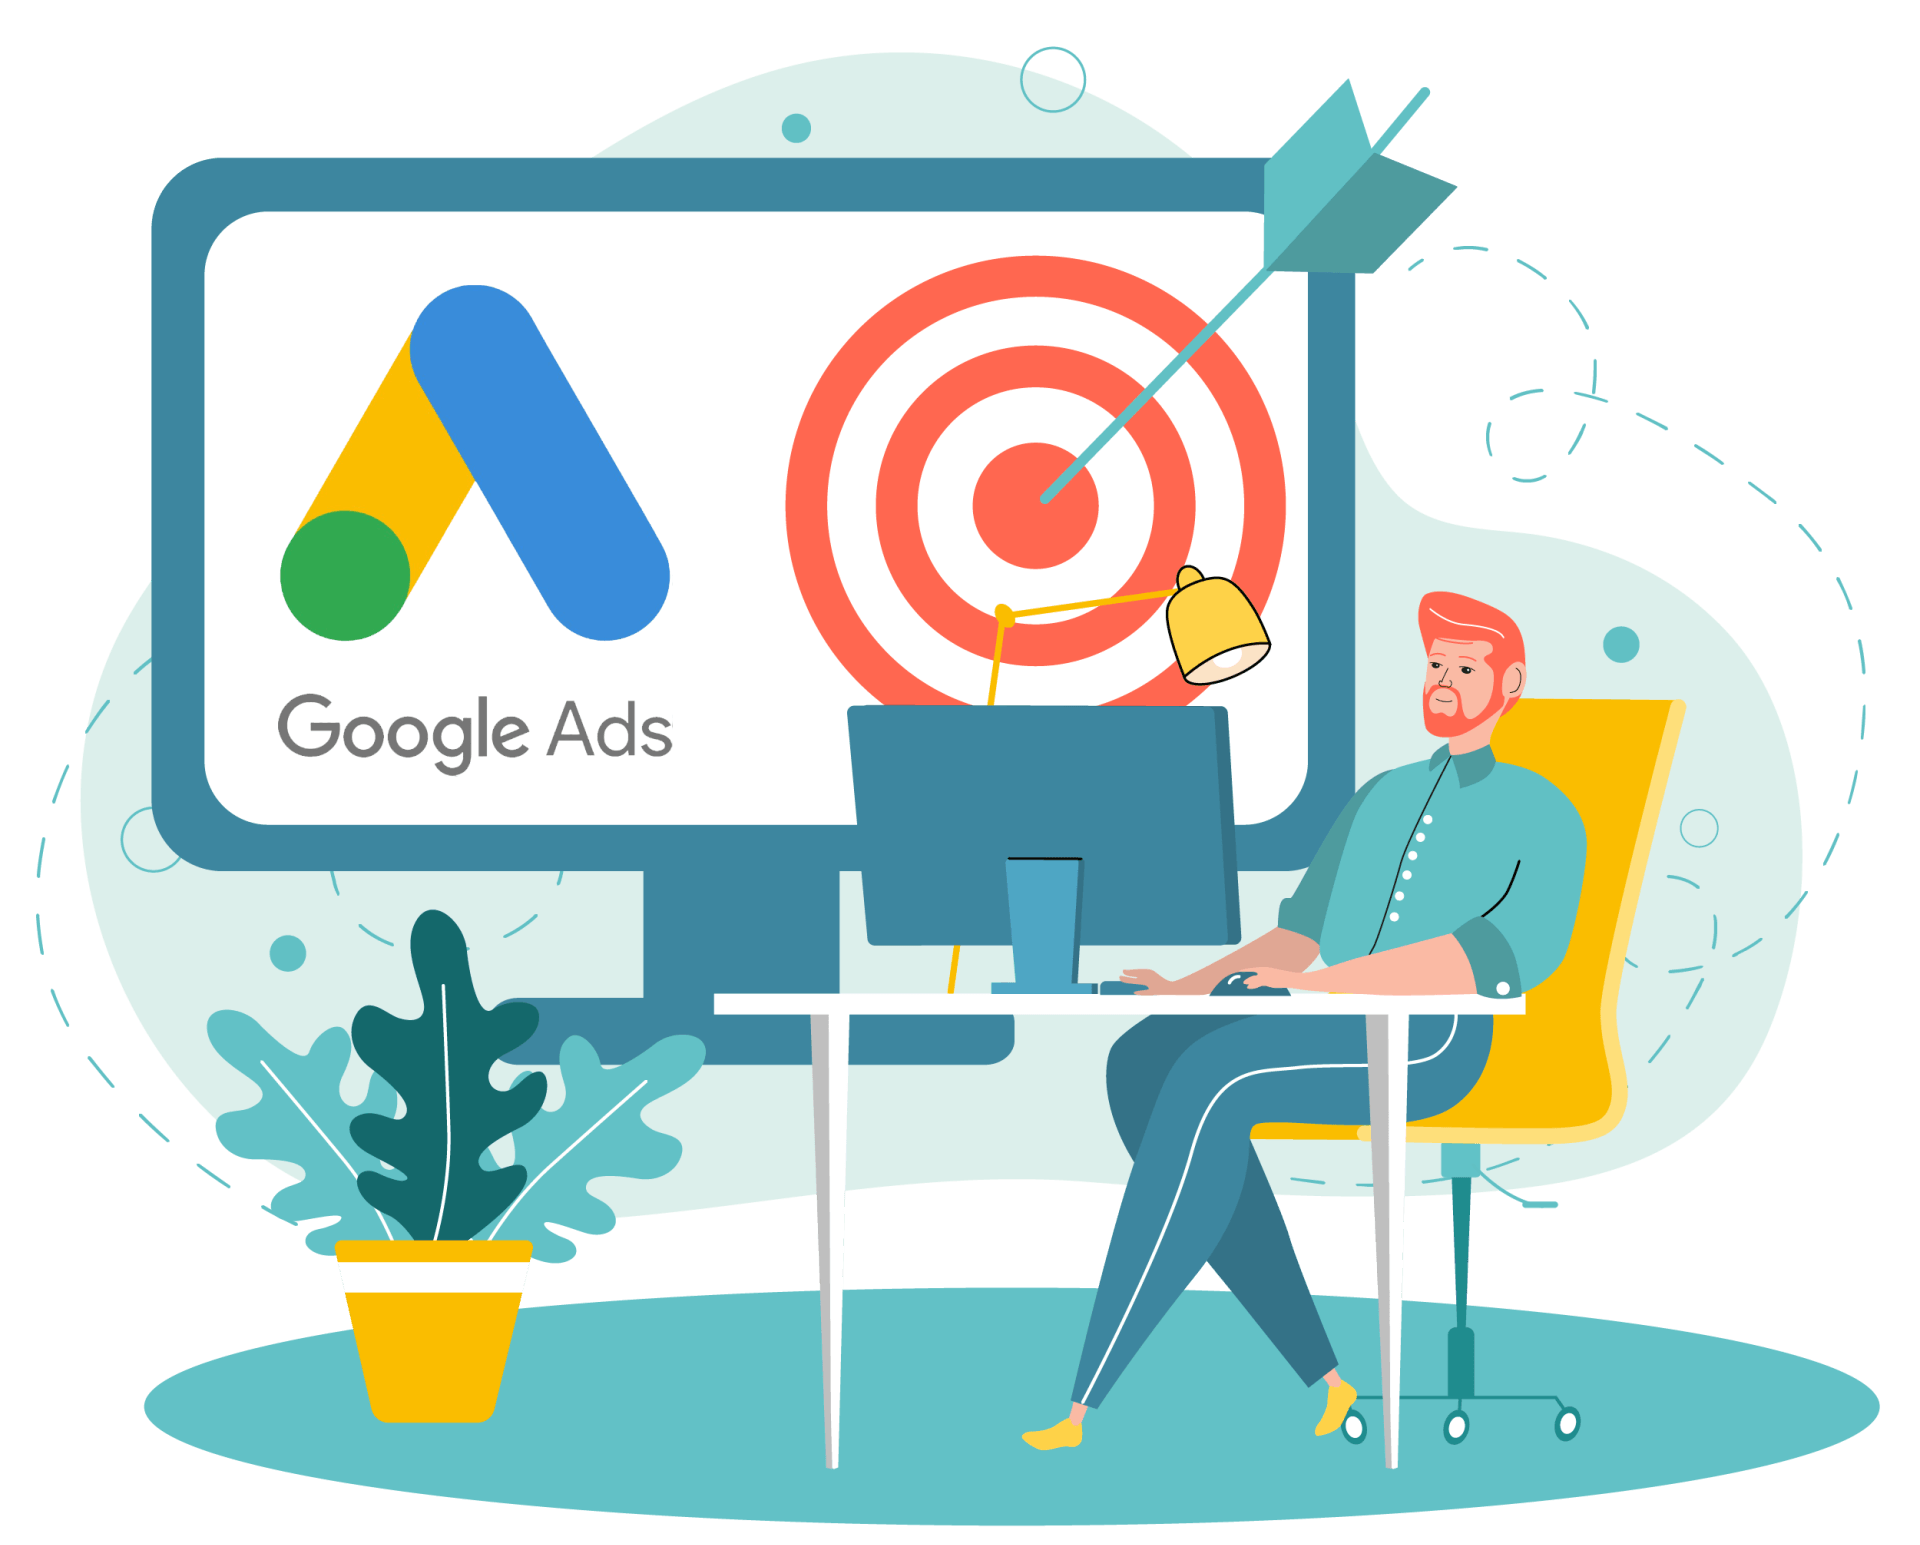 Google Ads Agency